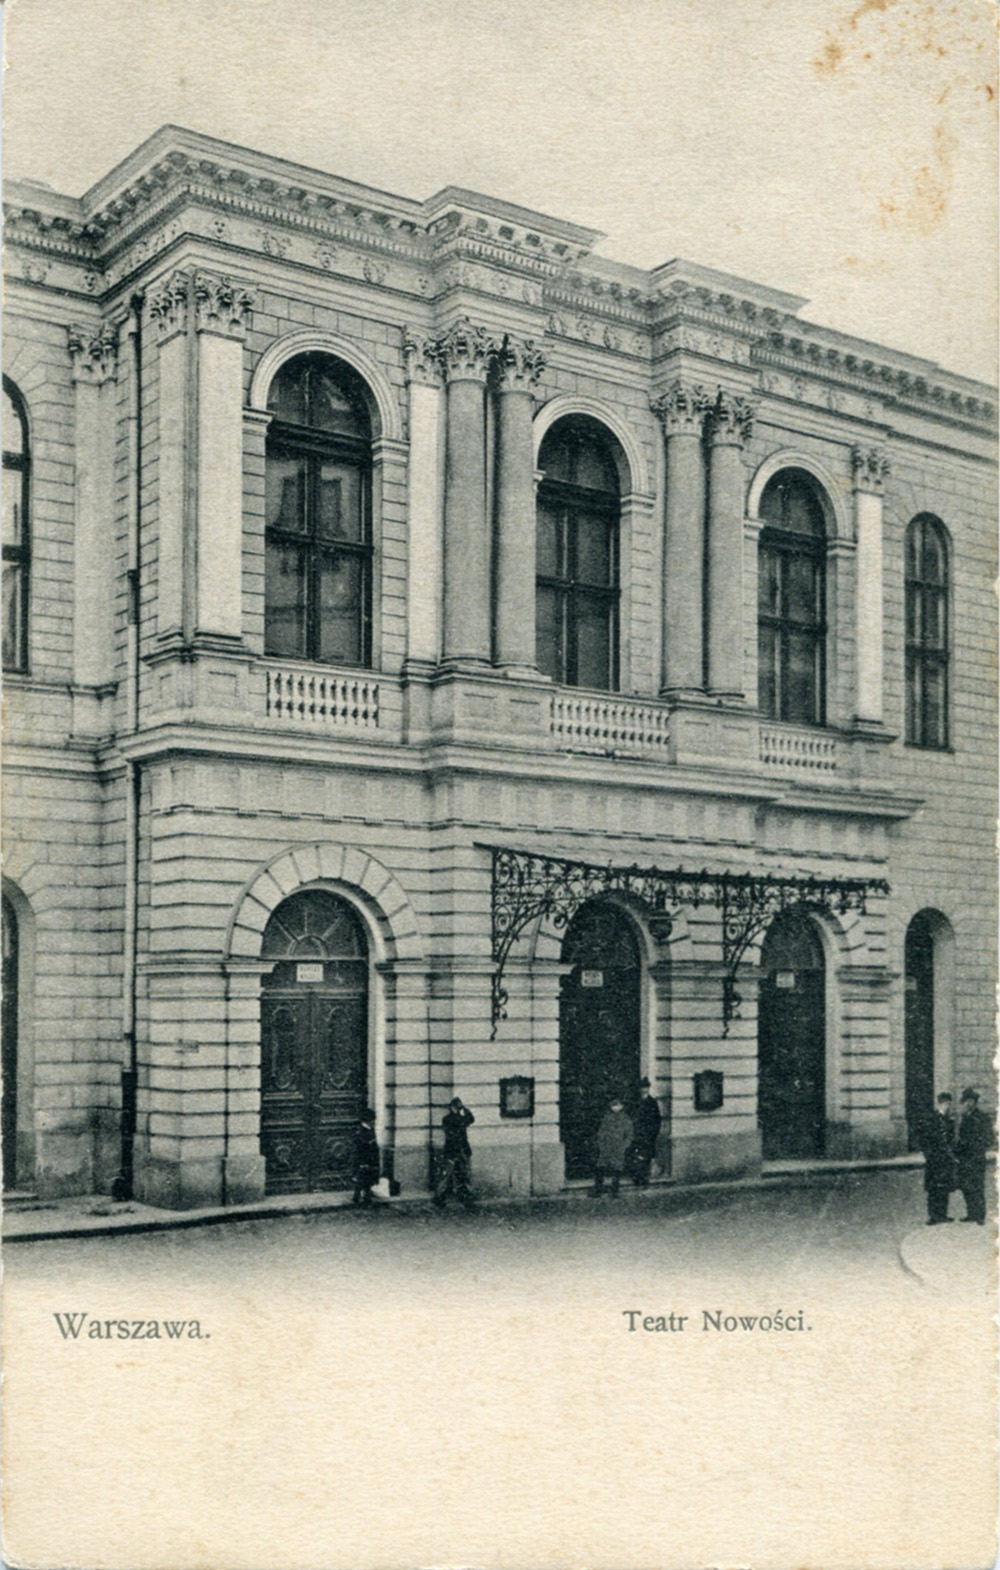 Warsaw Theatre Nowości